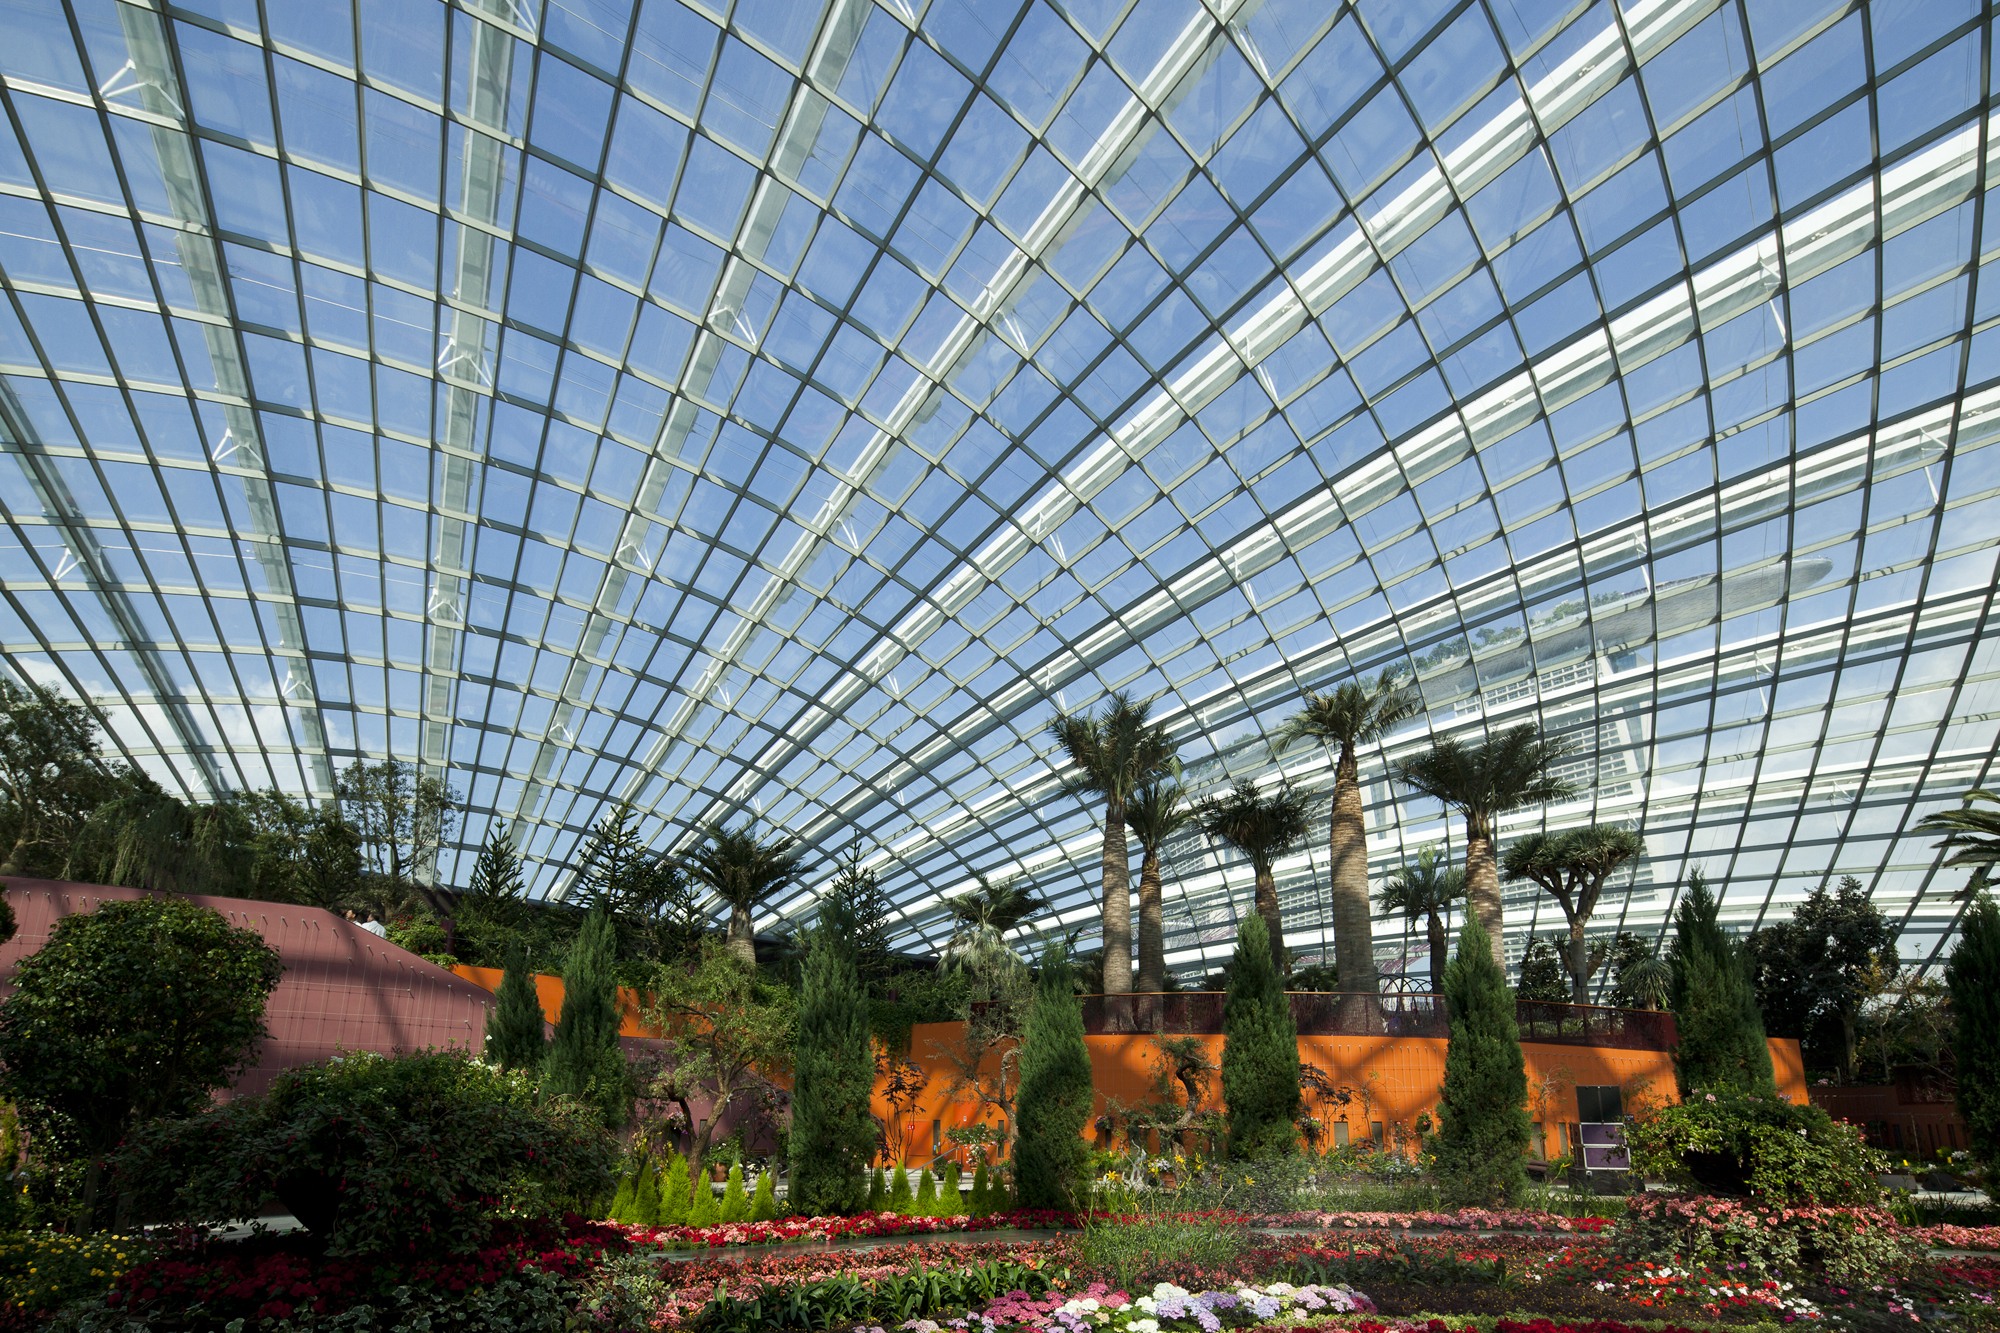 Планета теплиц. Сингапур оранжерея. Cooled Conservatories at Gardens by the Bay, Сингапур. Сингапур оранжерея архитектура. Сингапур оранжерея 'Flower Dome' архитектура.